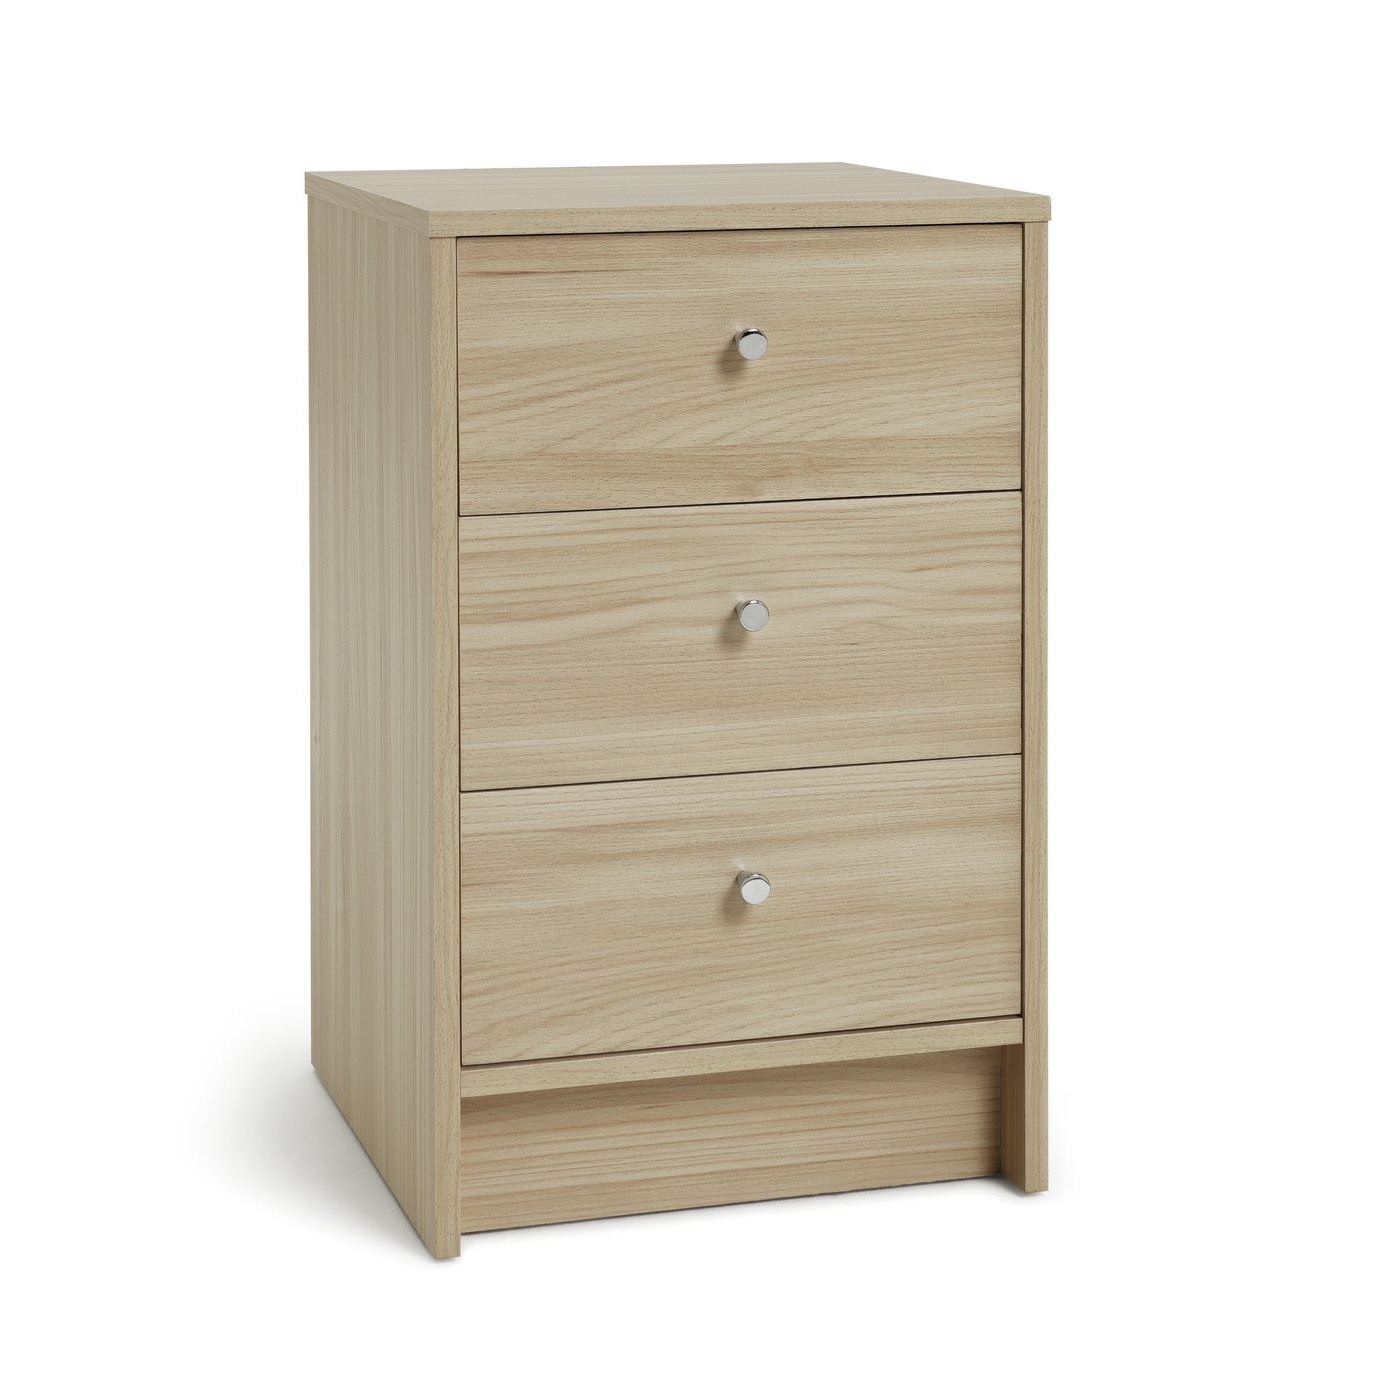 Argos Home Malibu 3 Drawer Bedside Cabinet - Beech Effect - image 1